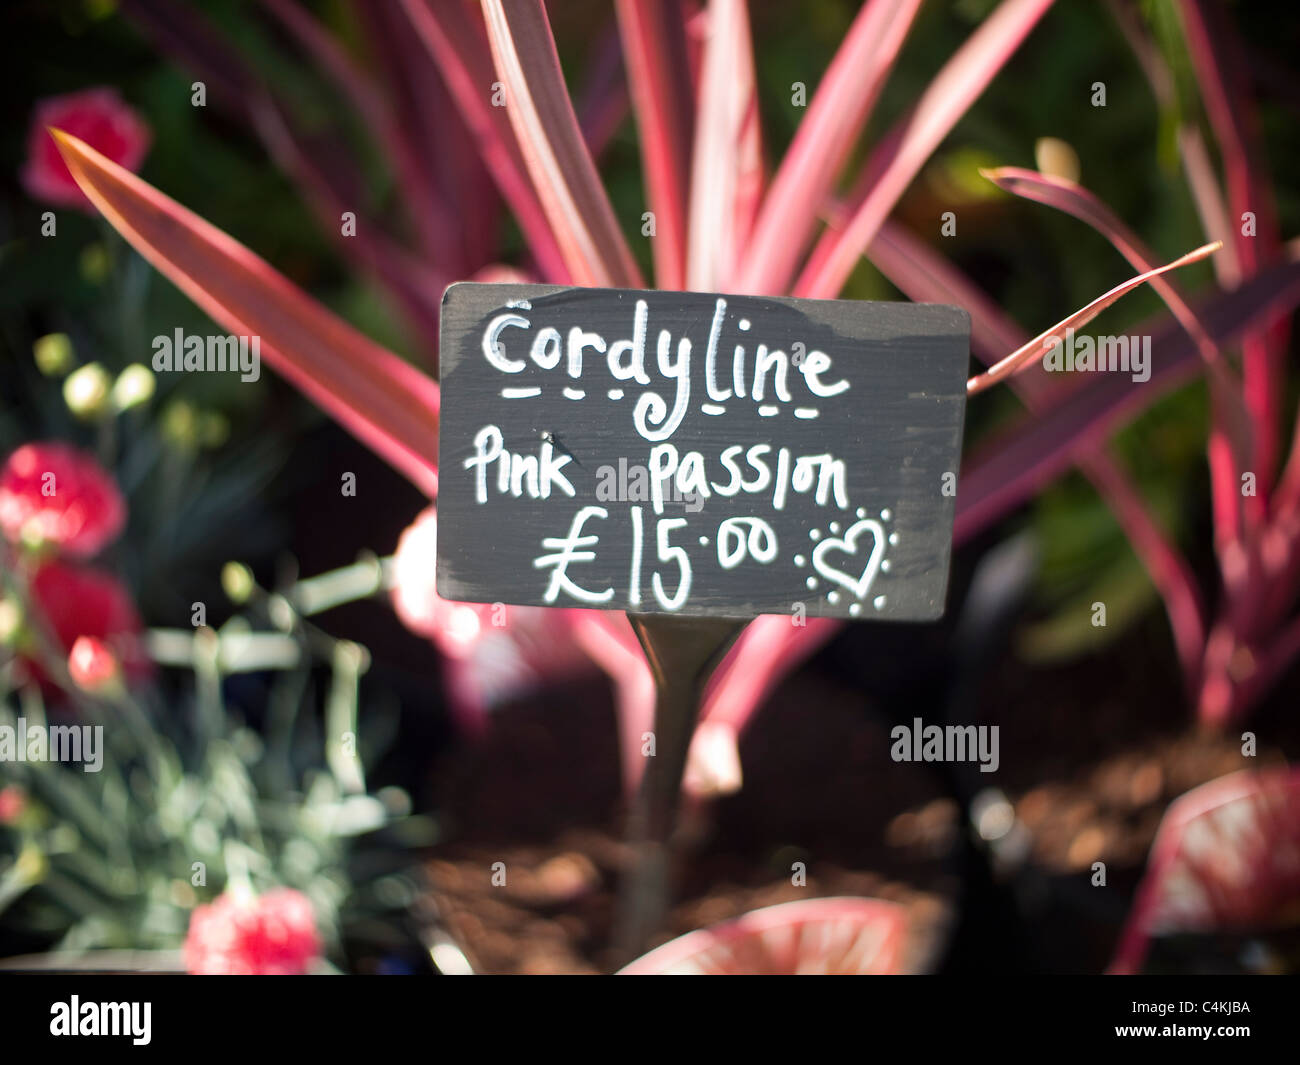 Cordyline on Sale at Gardening Scotland Stock Photo